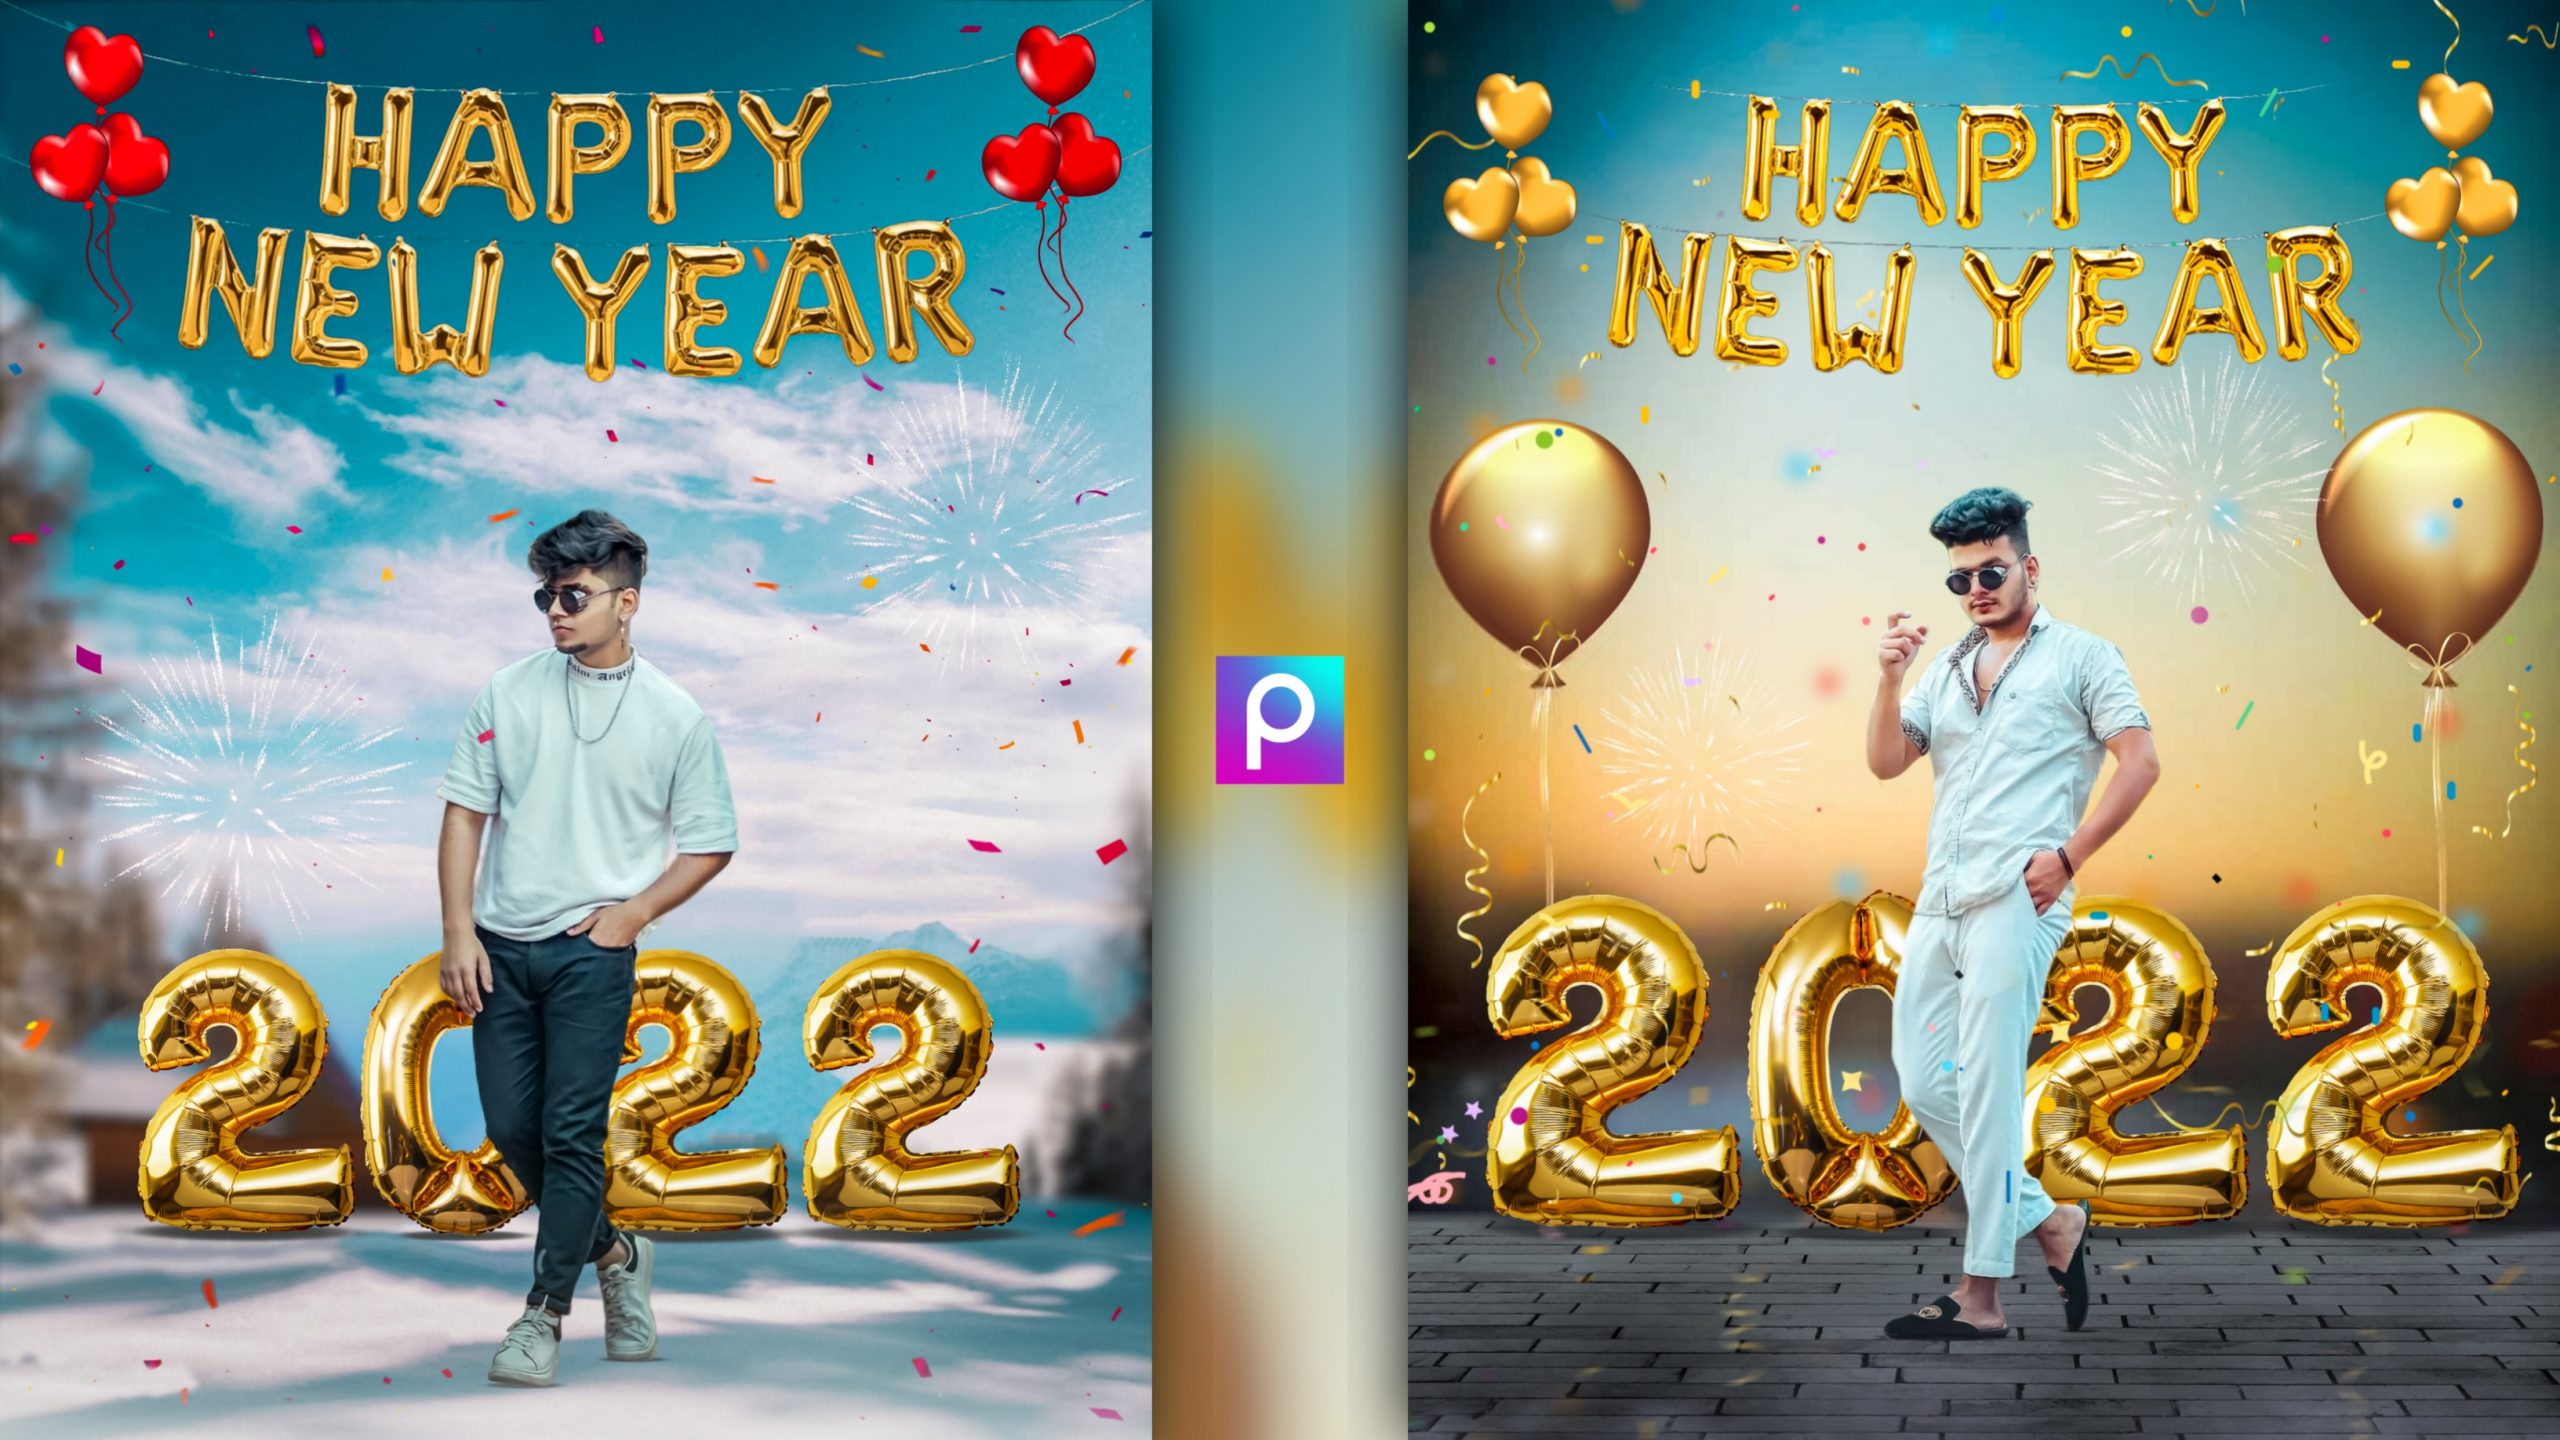 PicsArt Happy New Year 2022 Photo Editing Download Background And PNG -  Tahir Editz